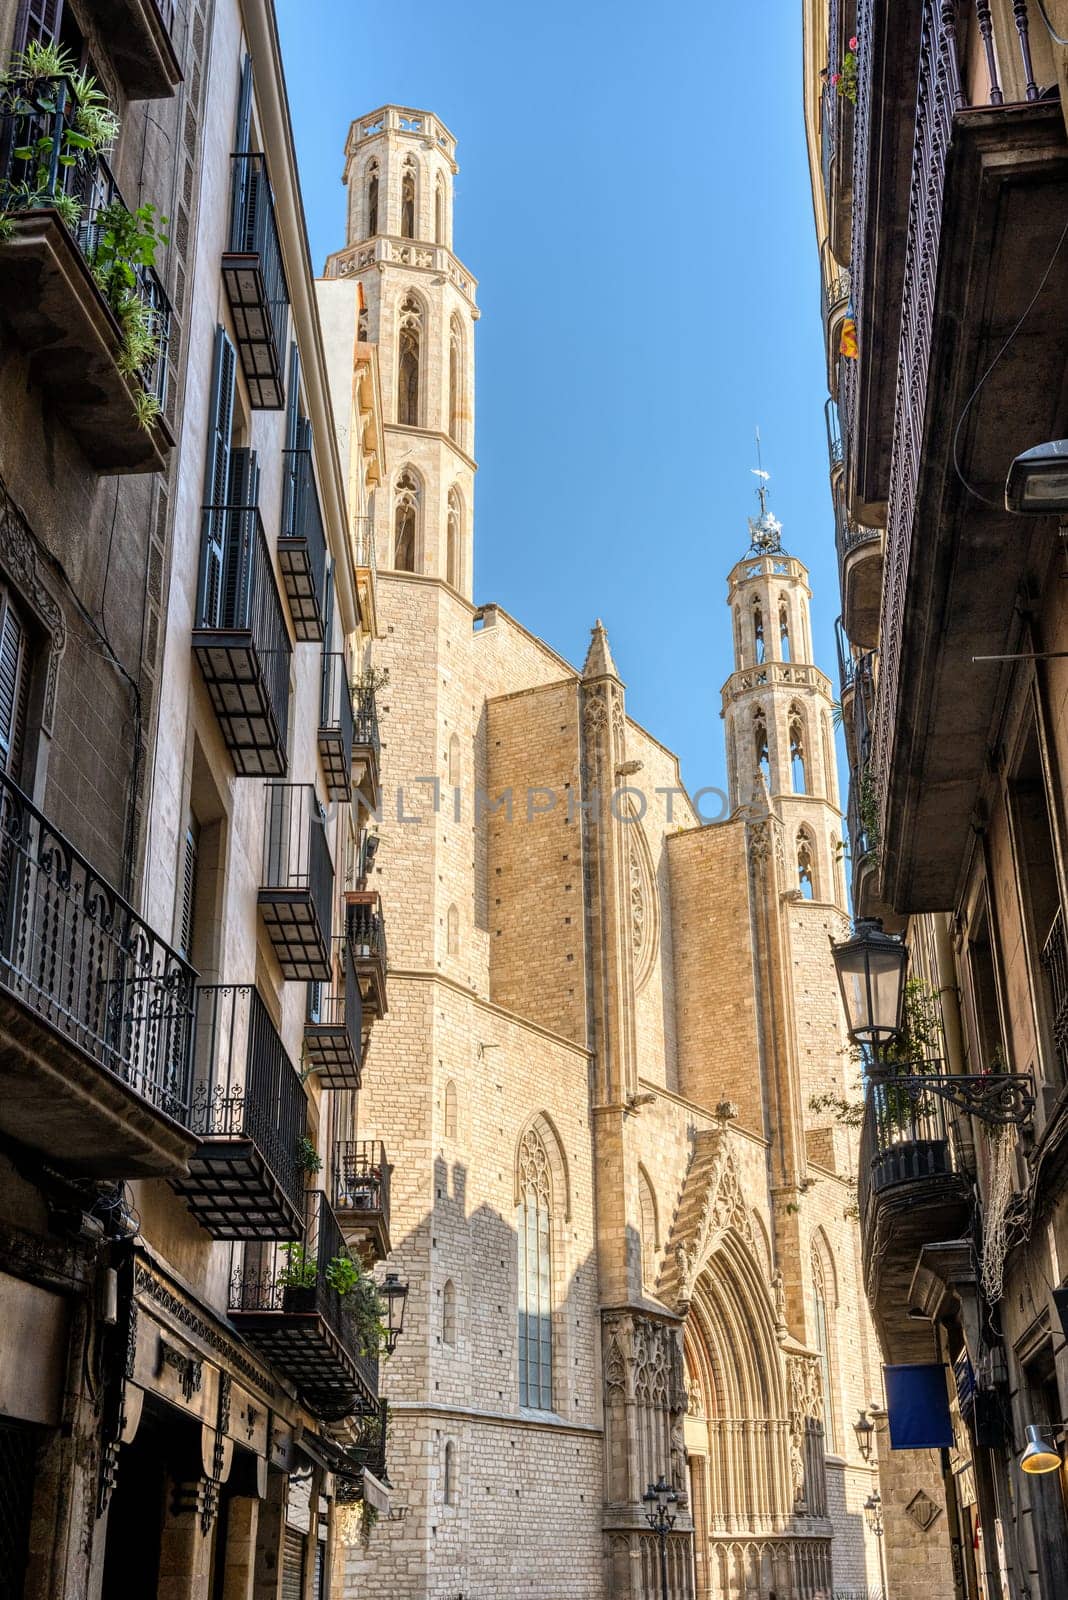 The iconic Santa Maria del Mar church in Barcelona by elxeneize